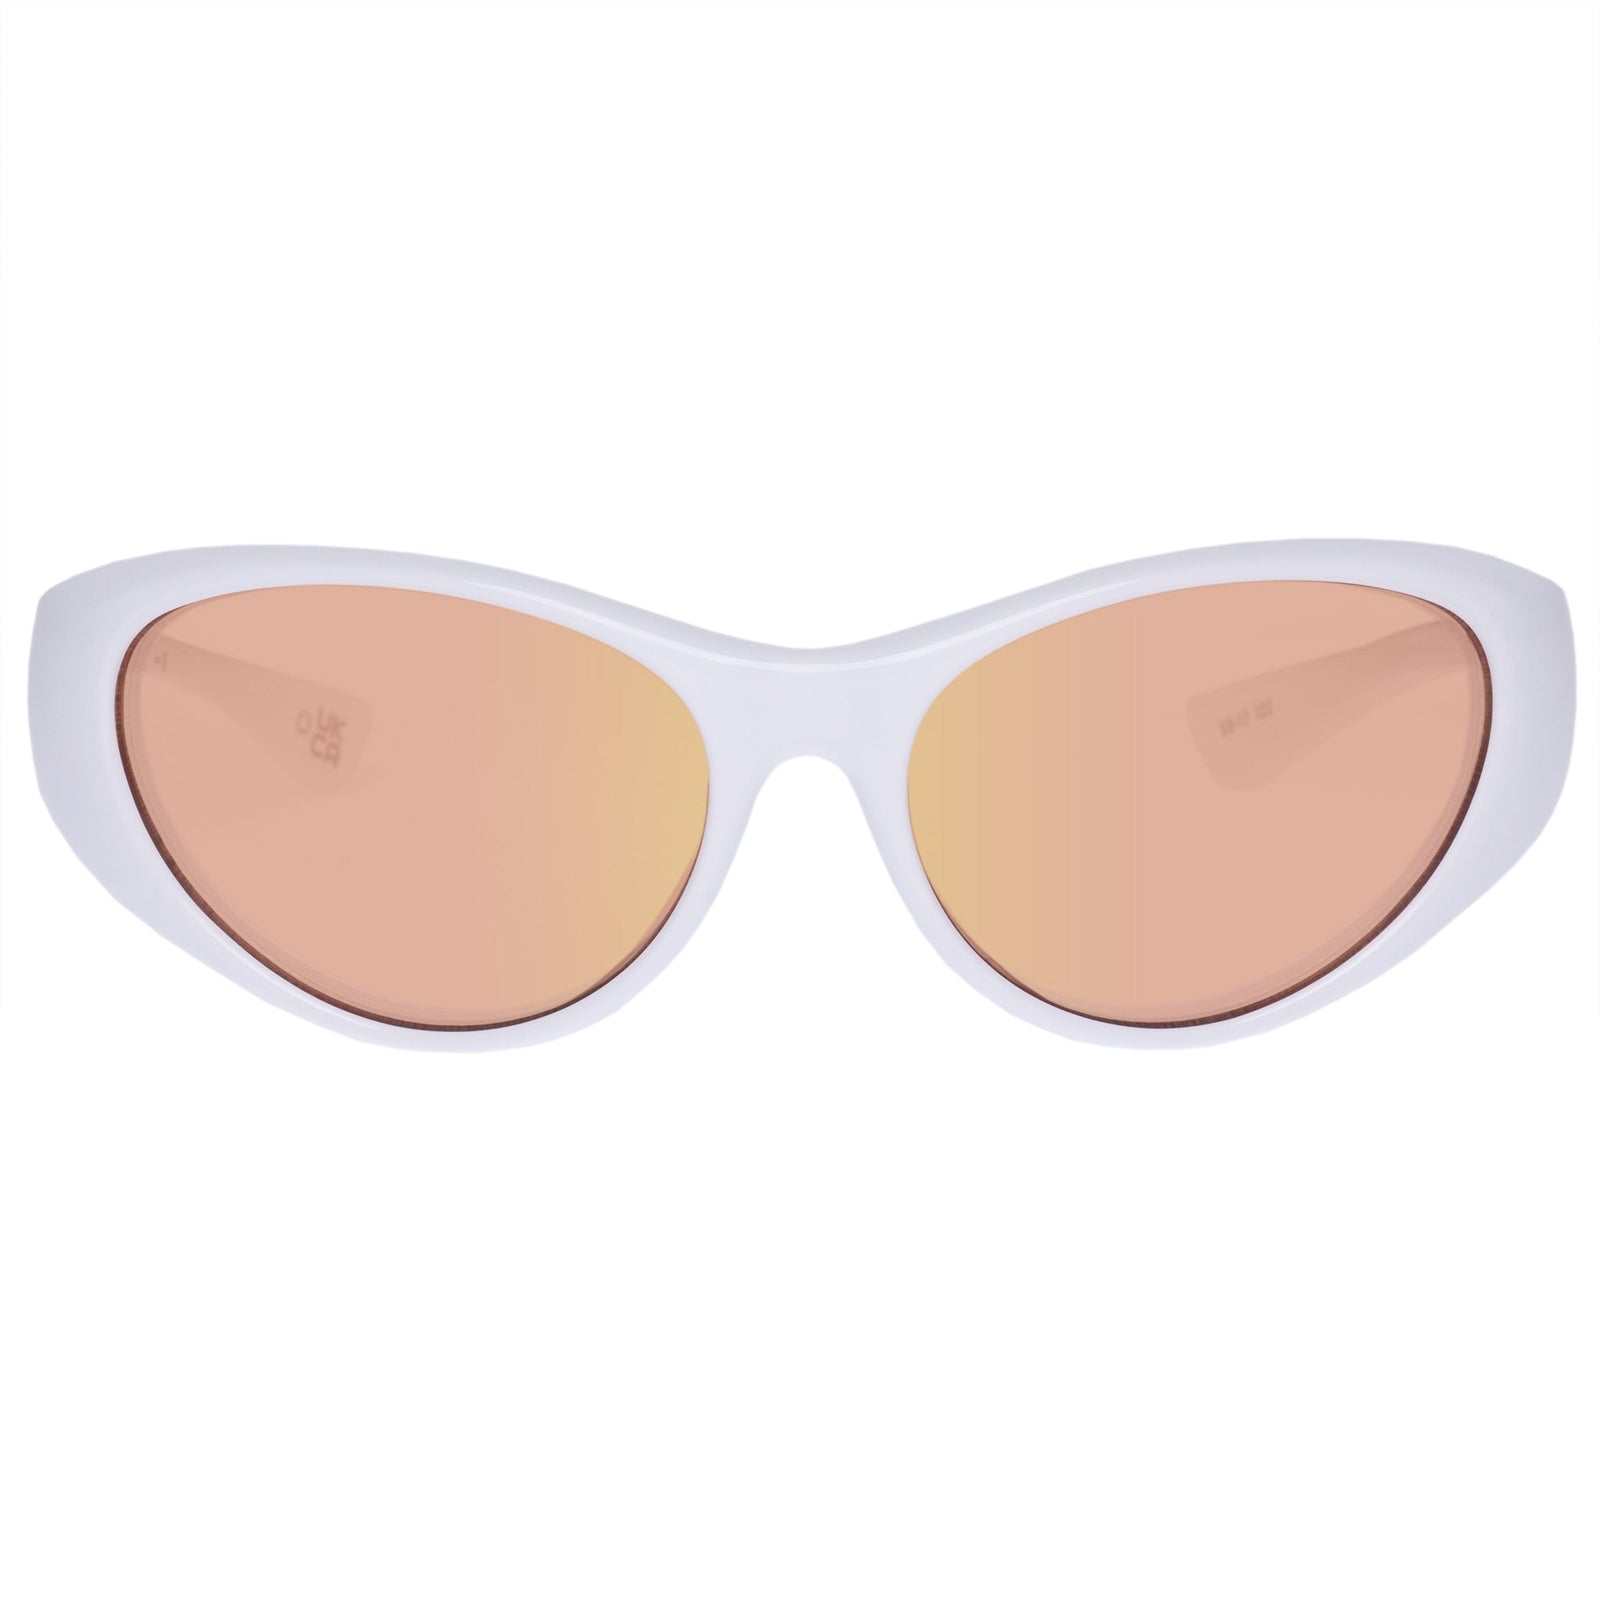 Le Specs Dotcom Wraparound Sunglasses with Mirrored Lens in White